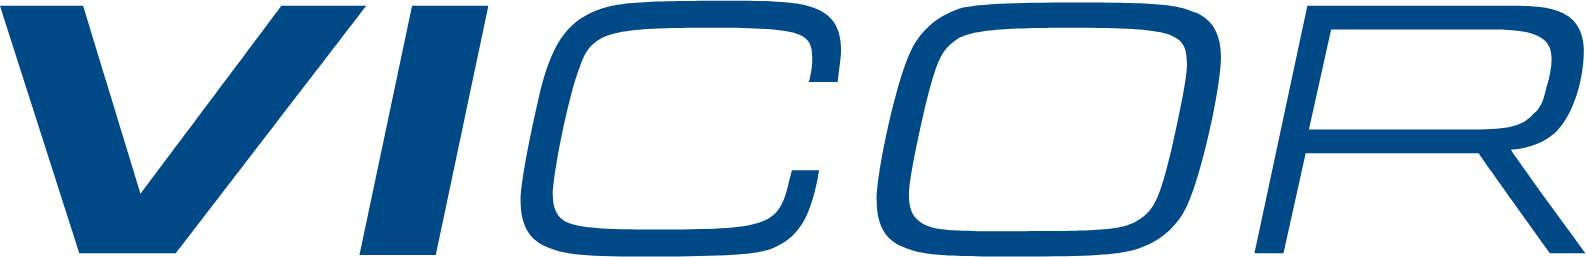 Vicor
 logo large (transparent PNG)